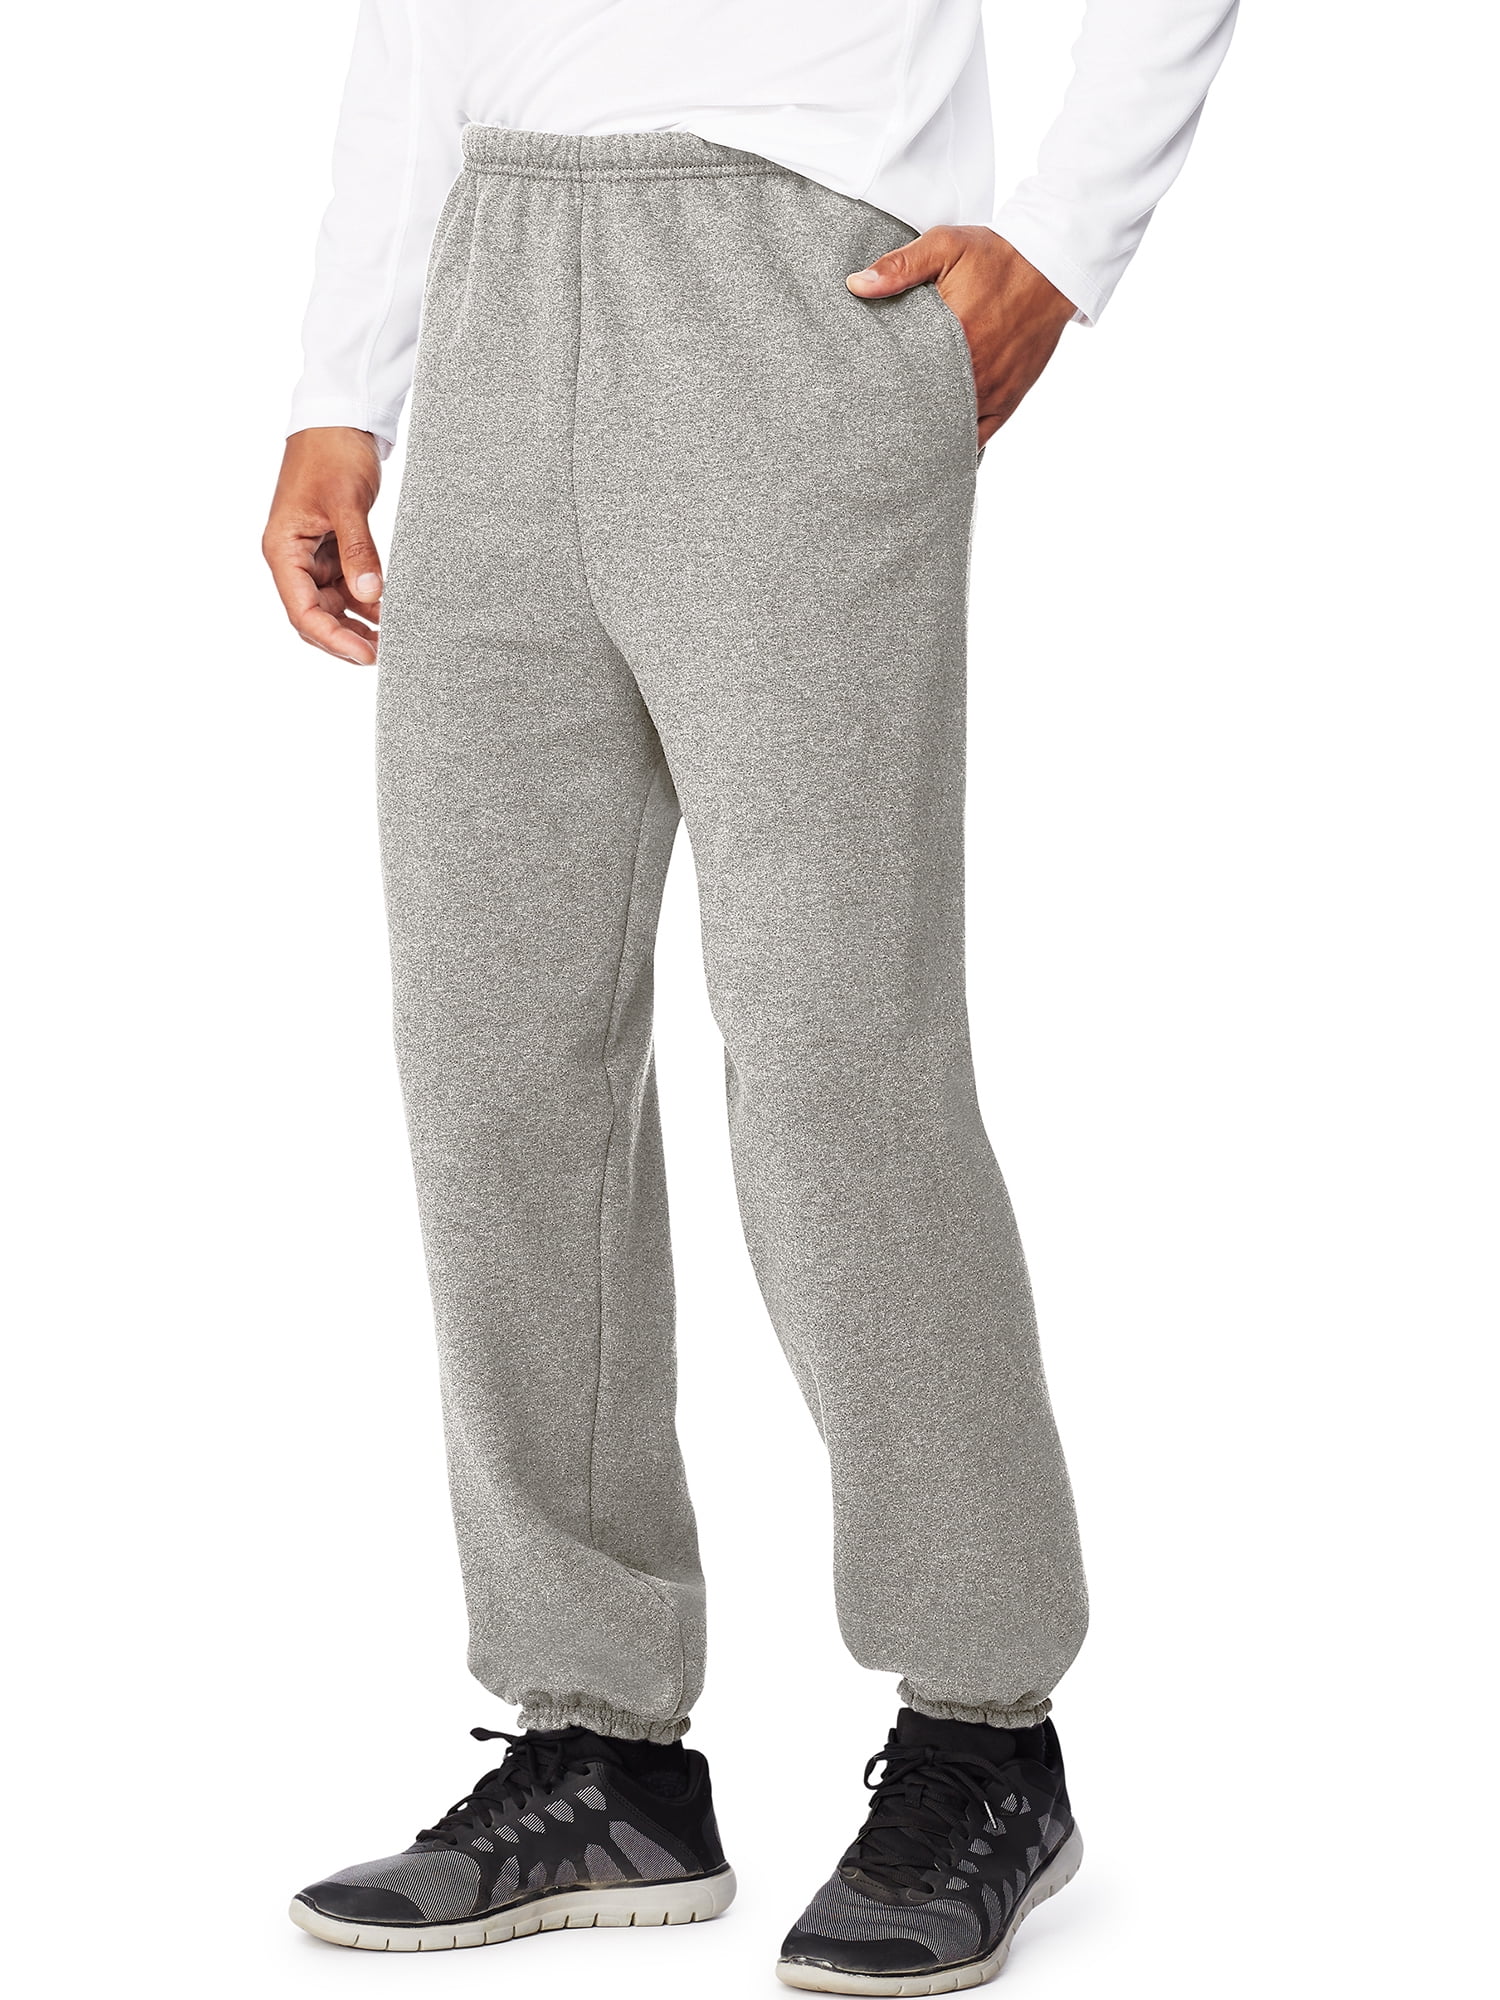 RQYYD Mens Sweatpants with Pockets Drawstring Athletic Pants Joggers  Running Sports Sweatpants Slim Fit Fashion Men's Pants Gray XL